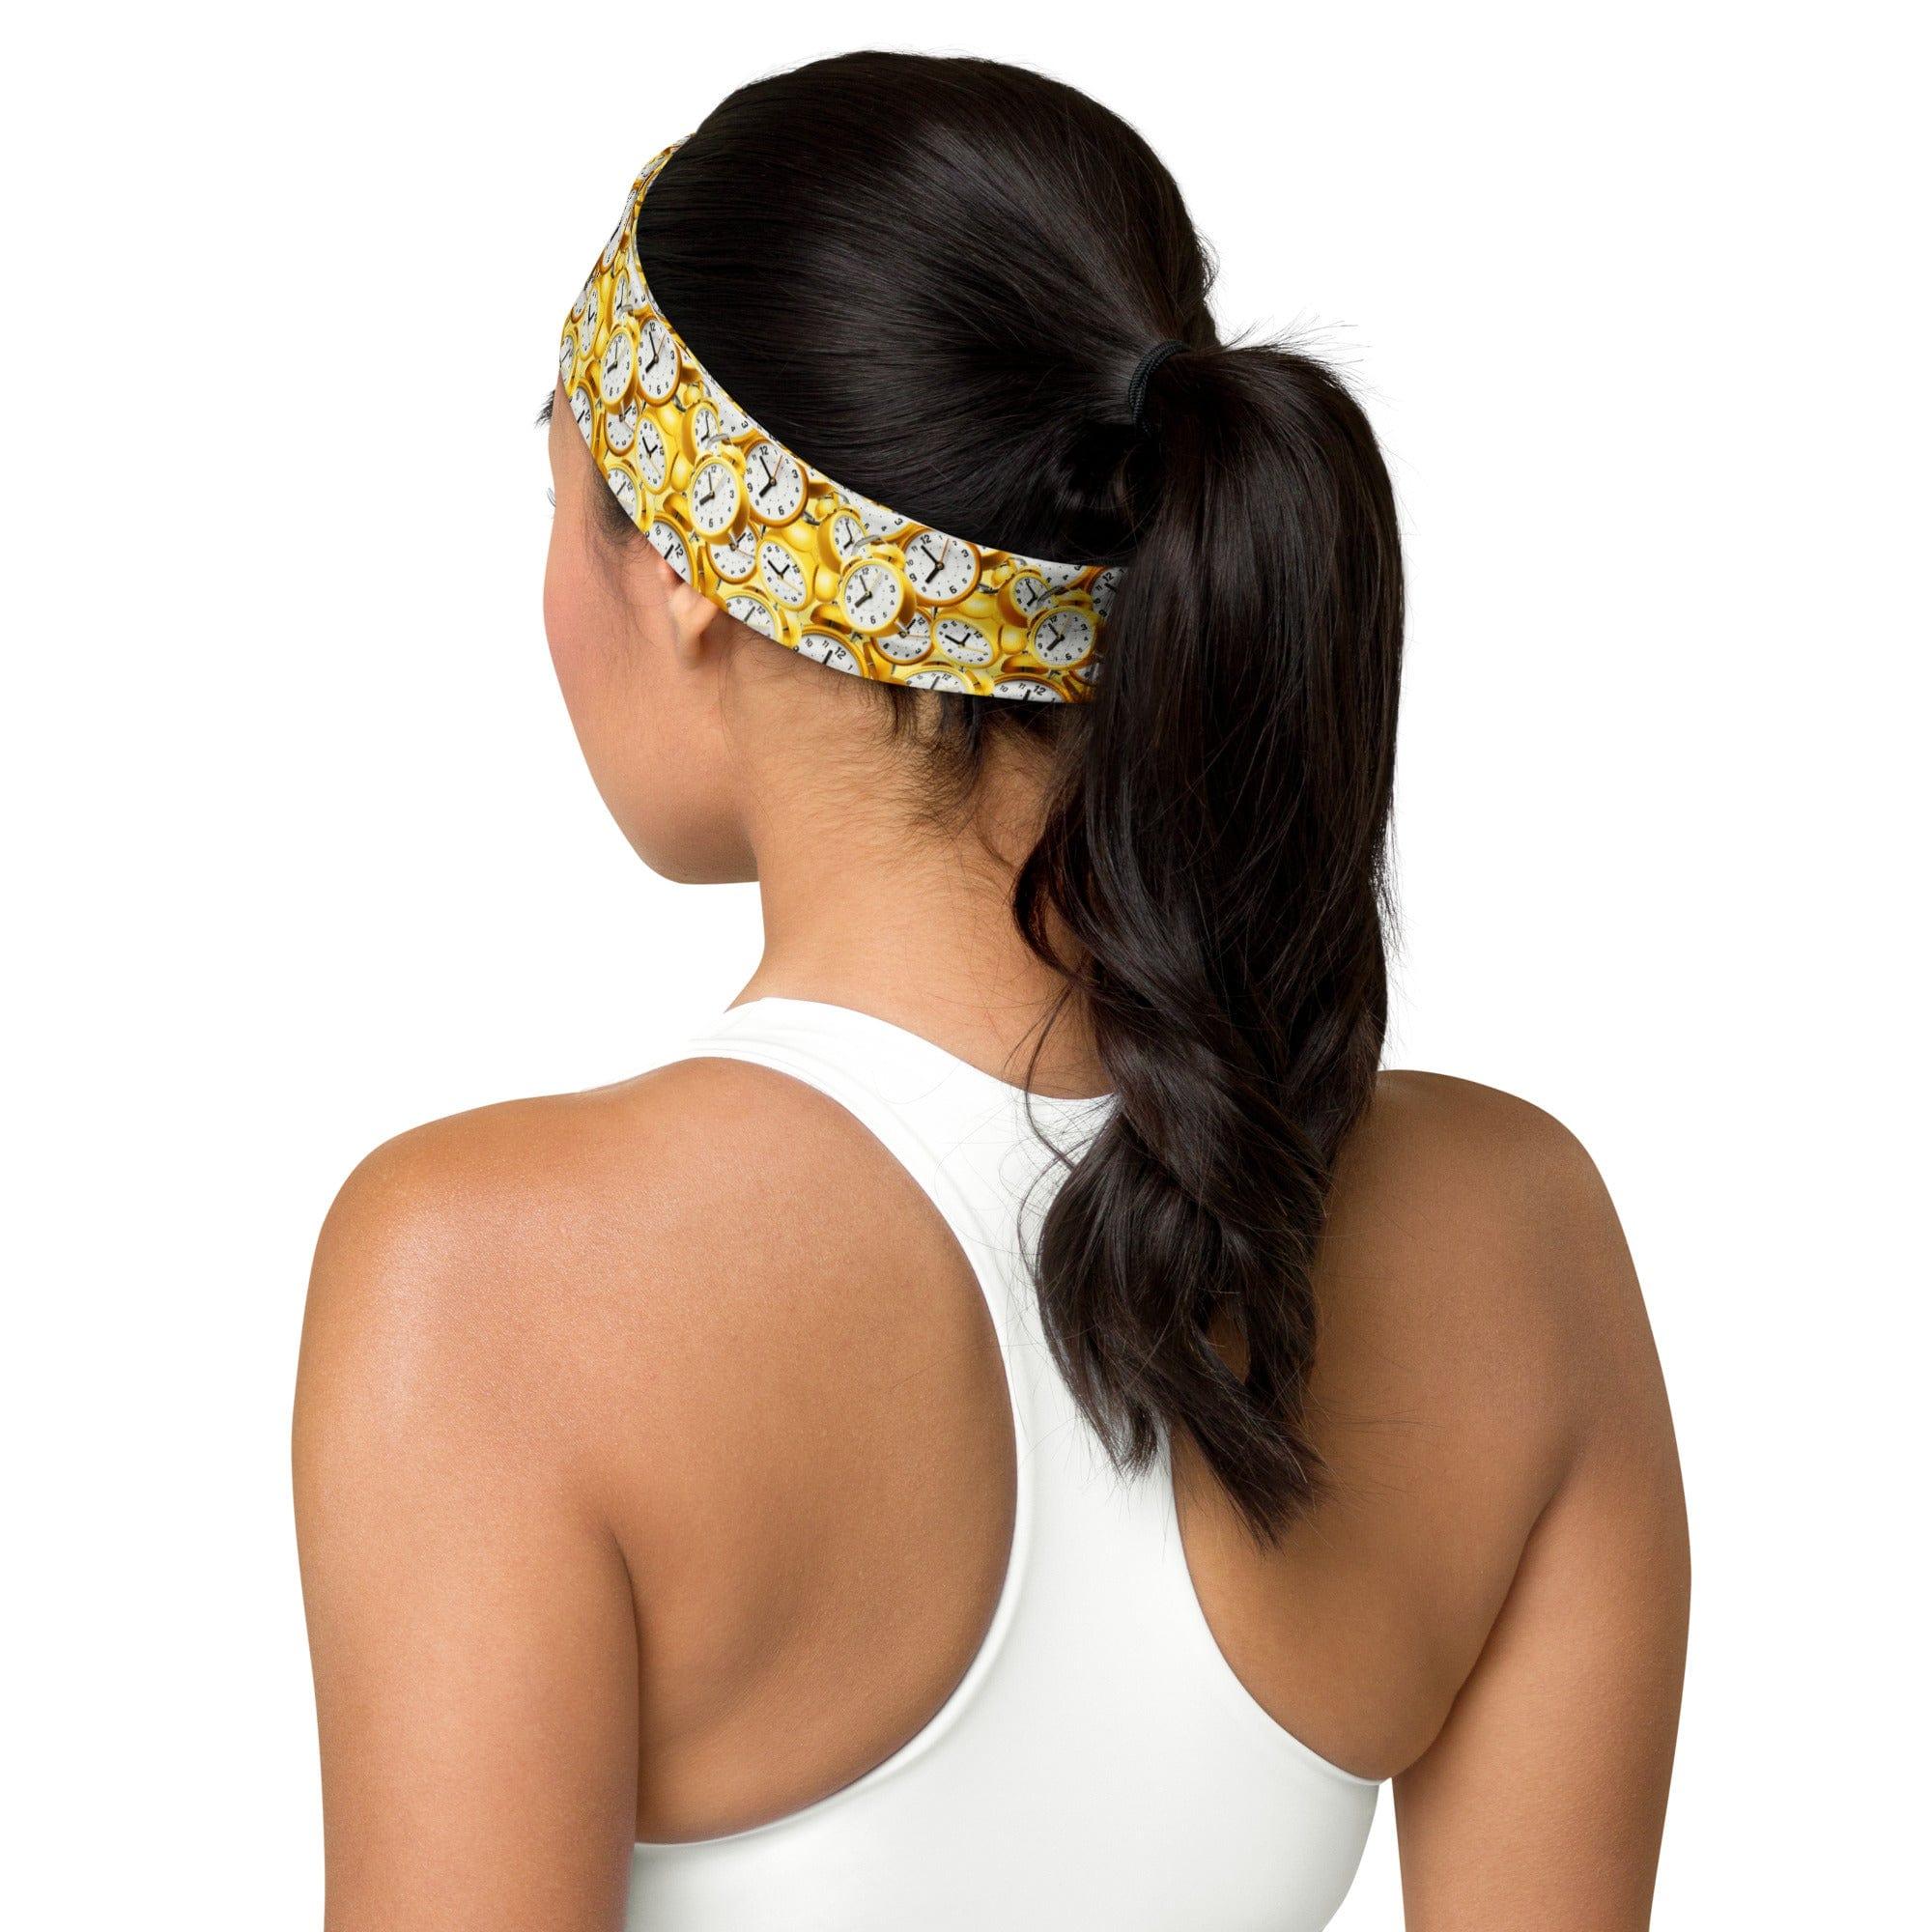 Cool headbands || Alarm Clocks Gold Quick Dry Headband - TopKoalaTee